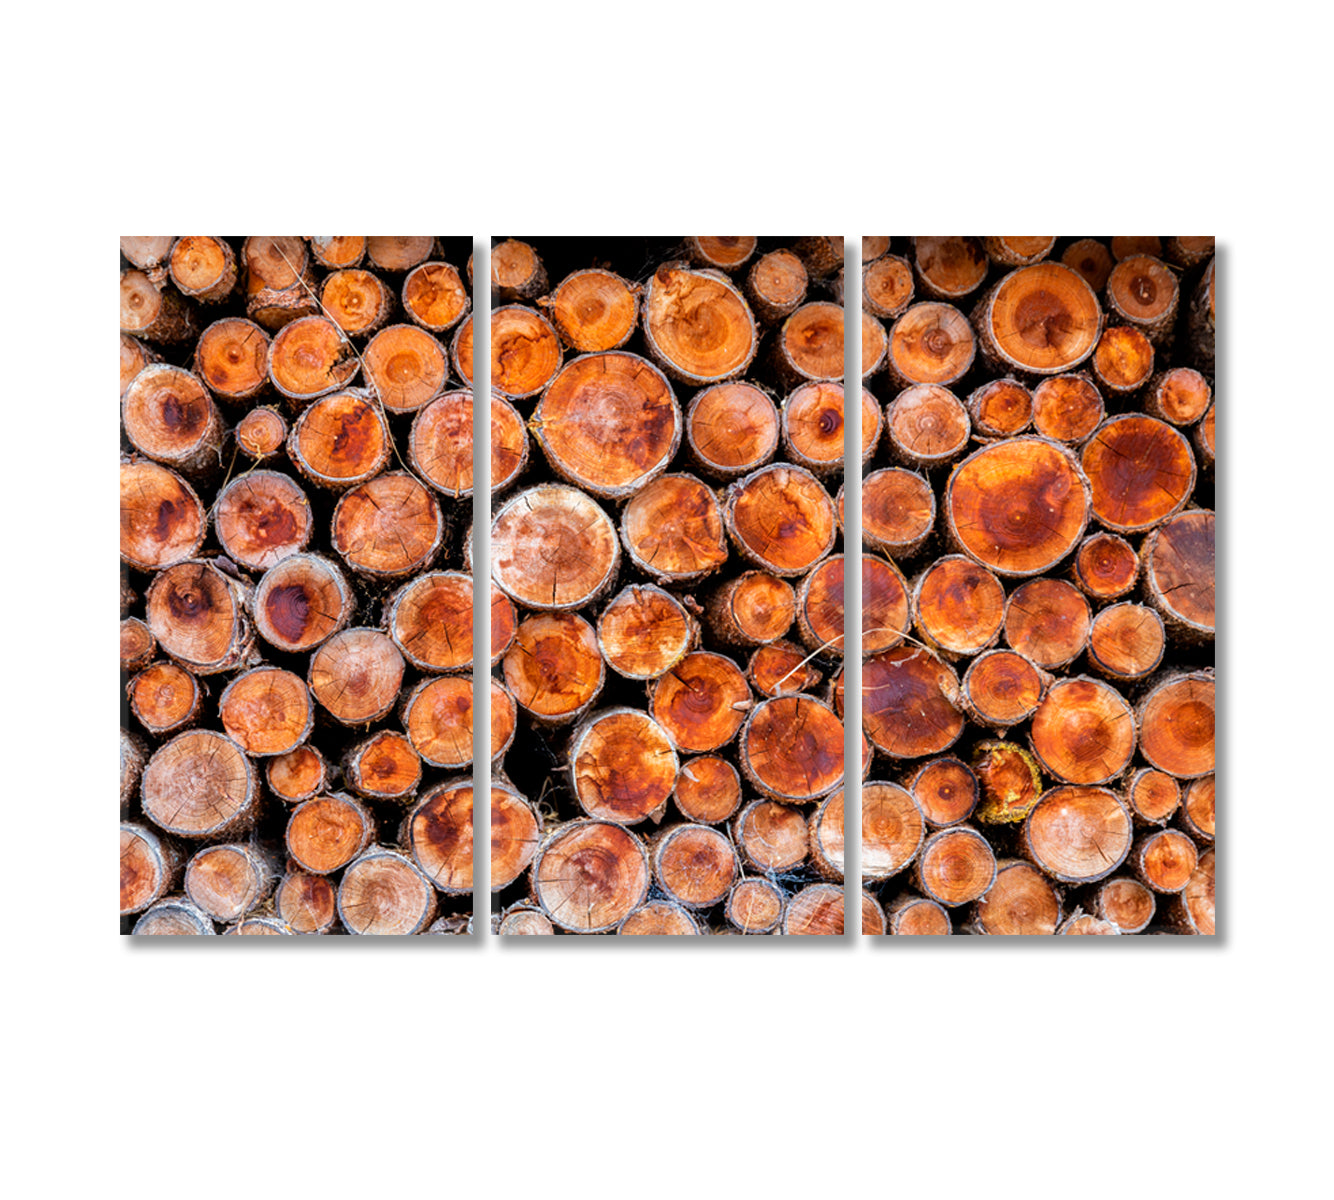 Wood Logs Canvas Print-Canvas Print-CetArt-3 Panels-36x24 inches-CetArt